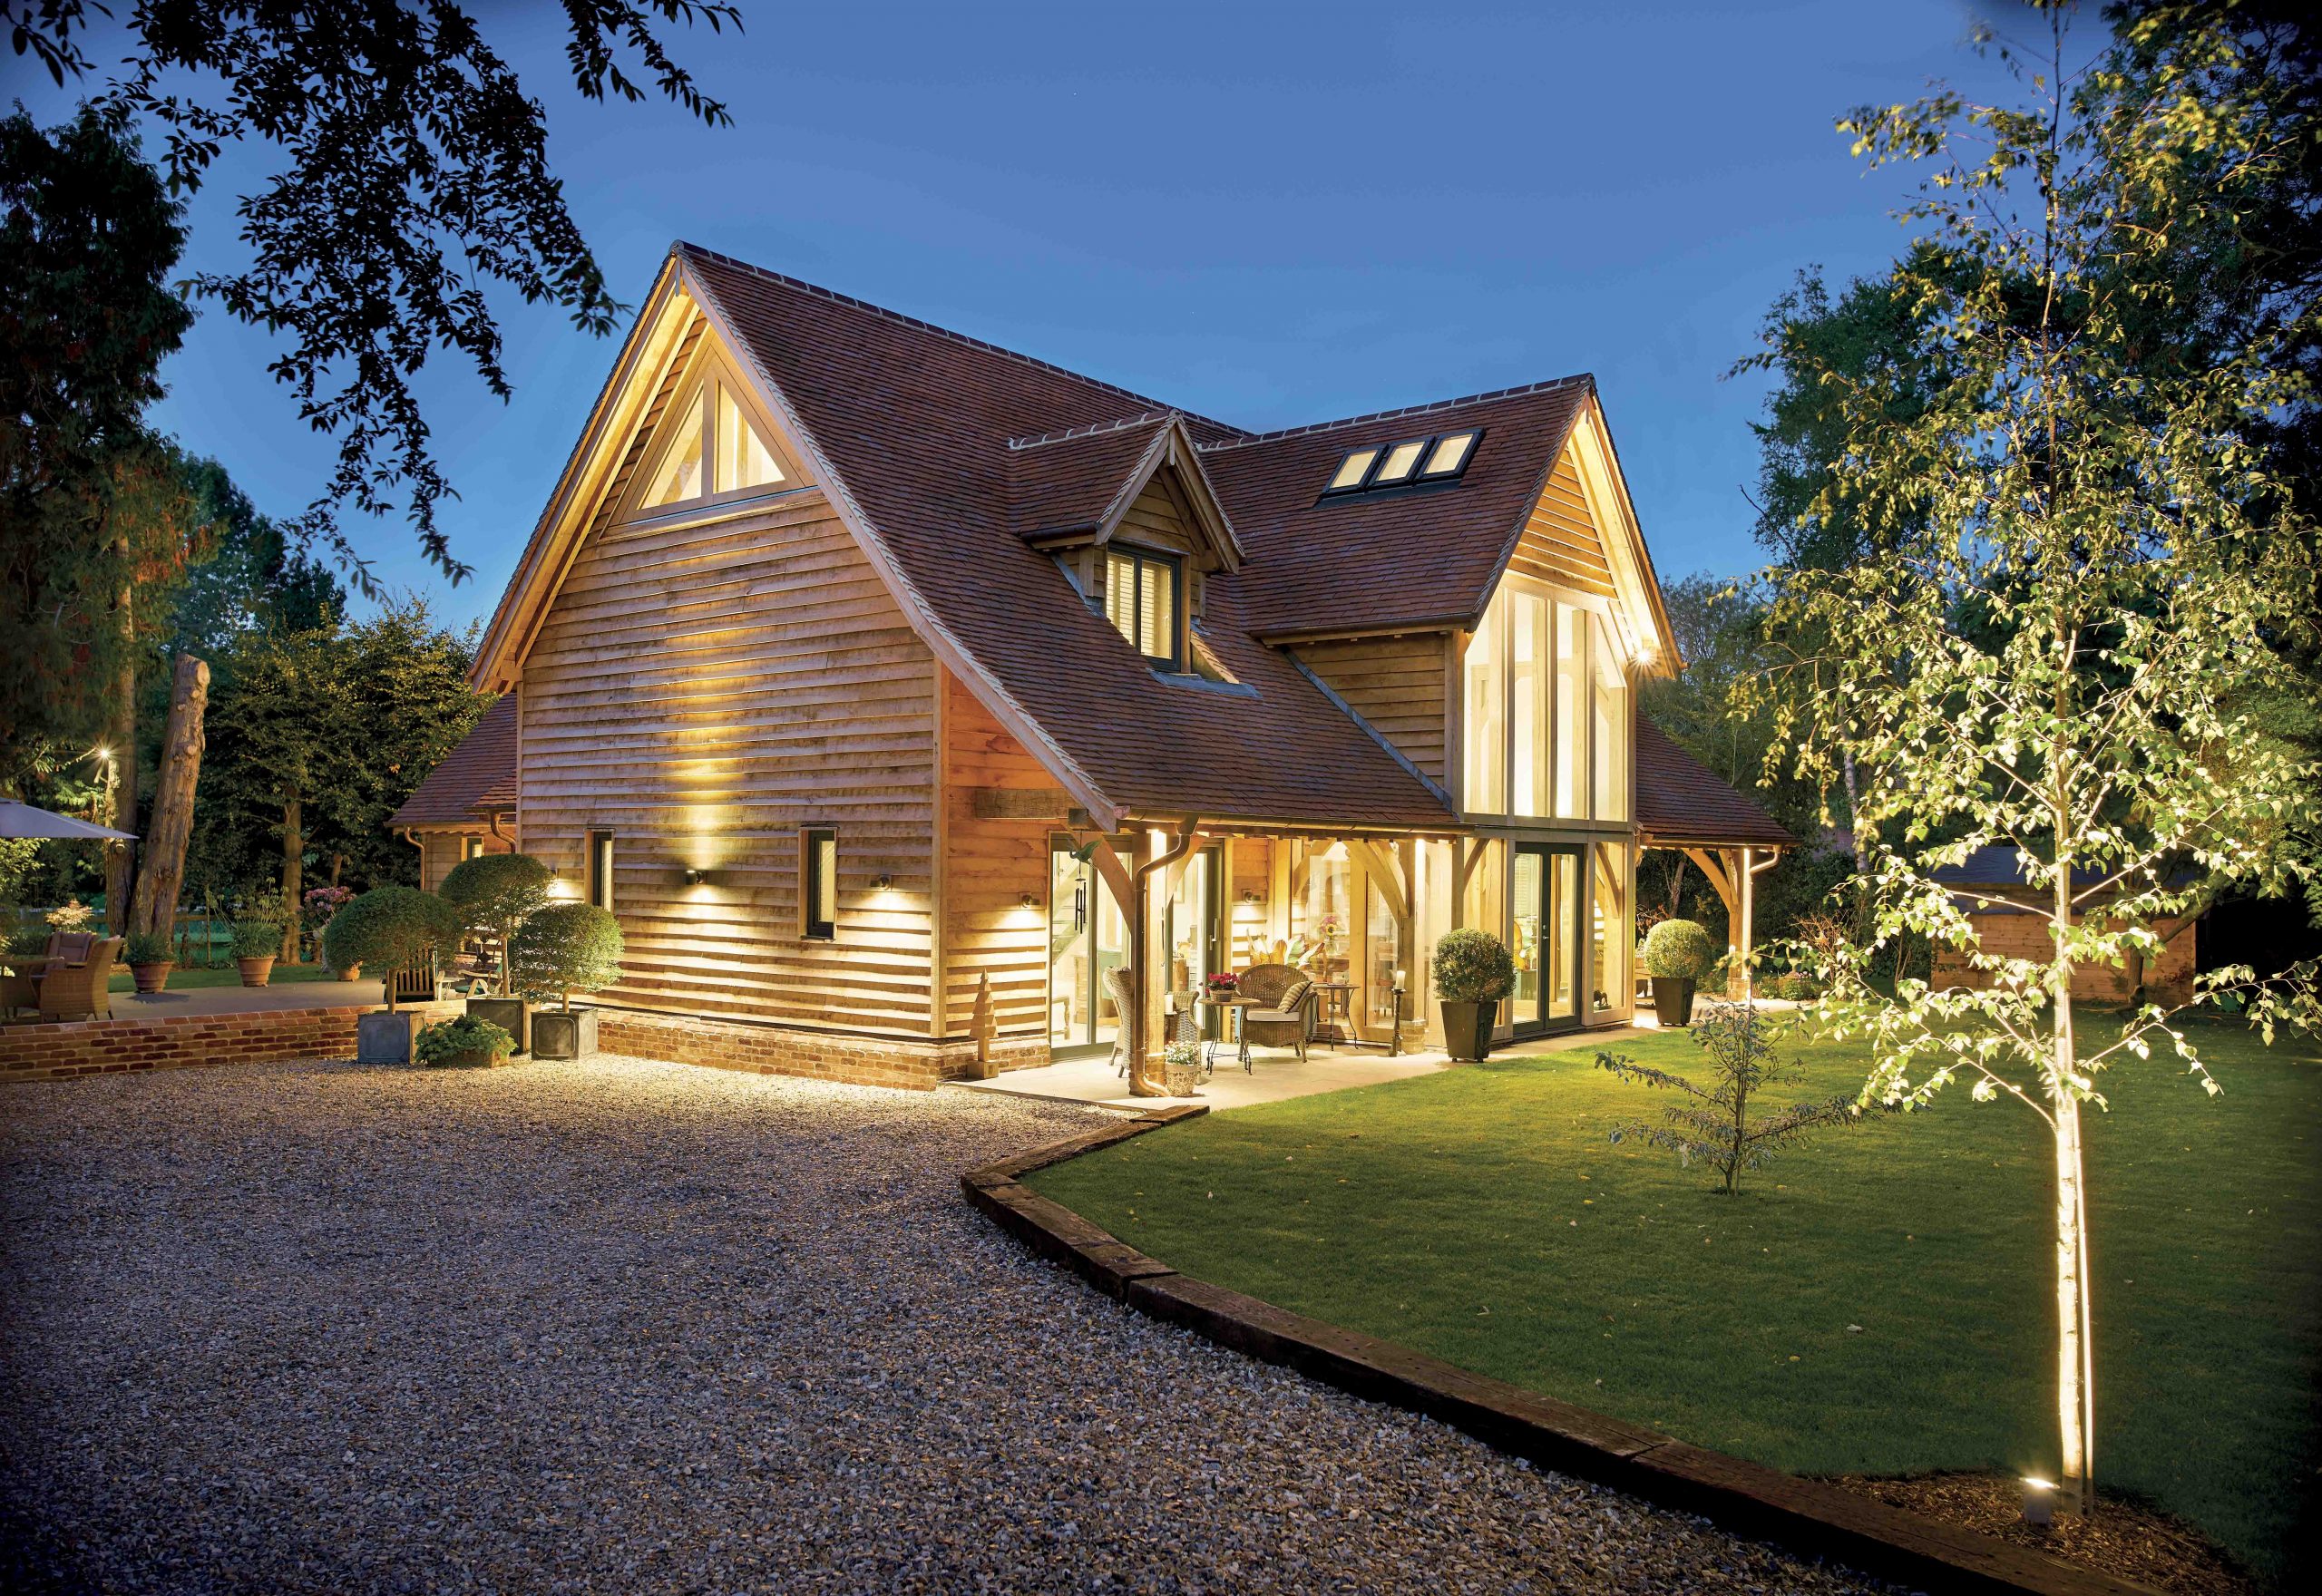 Oak-framed custom build homes at Rotherby Manor | Rotherby Manor – Custom Build | Bowbridge Homes